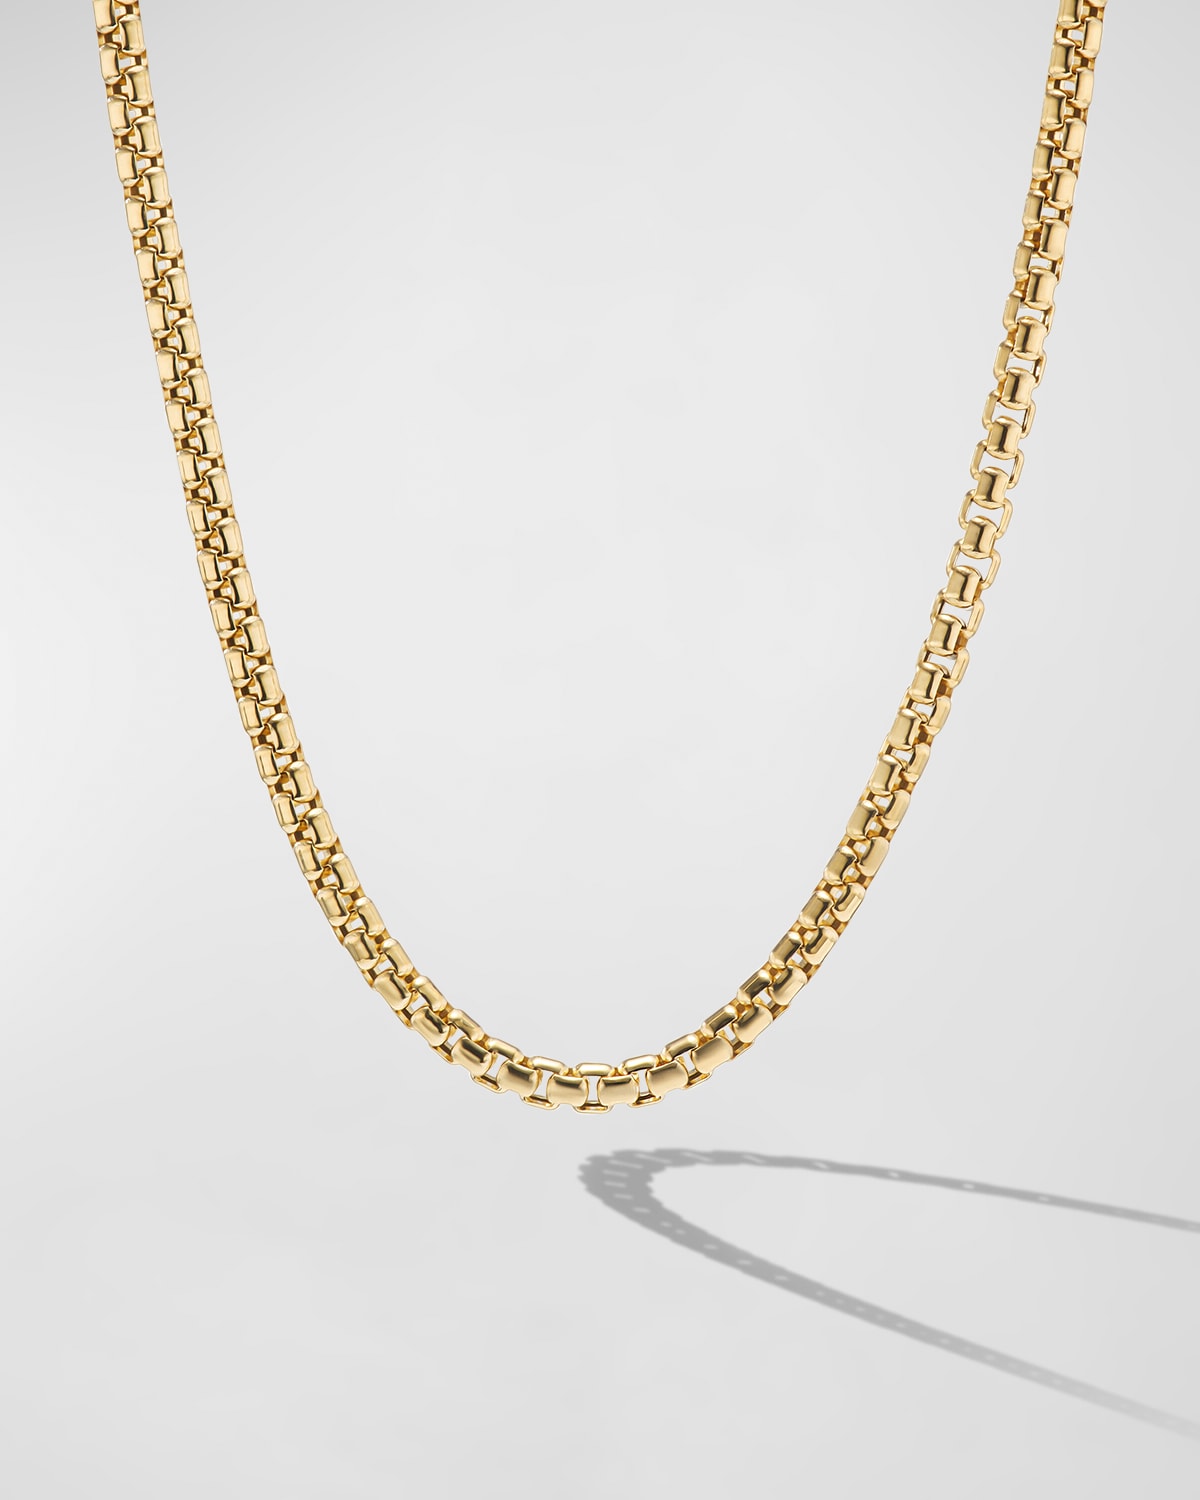 David Yurman Men's 18k Gold Box Chain Necklace, 24"l In Blue